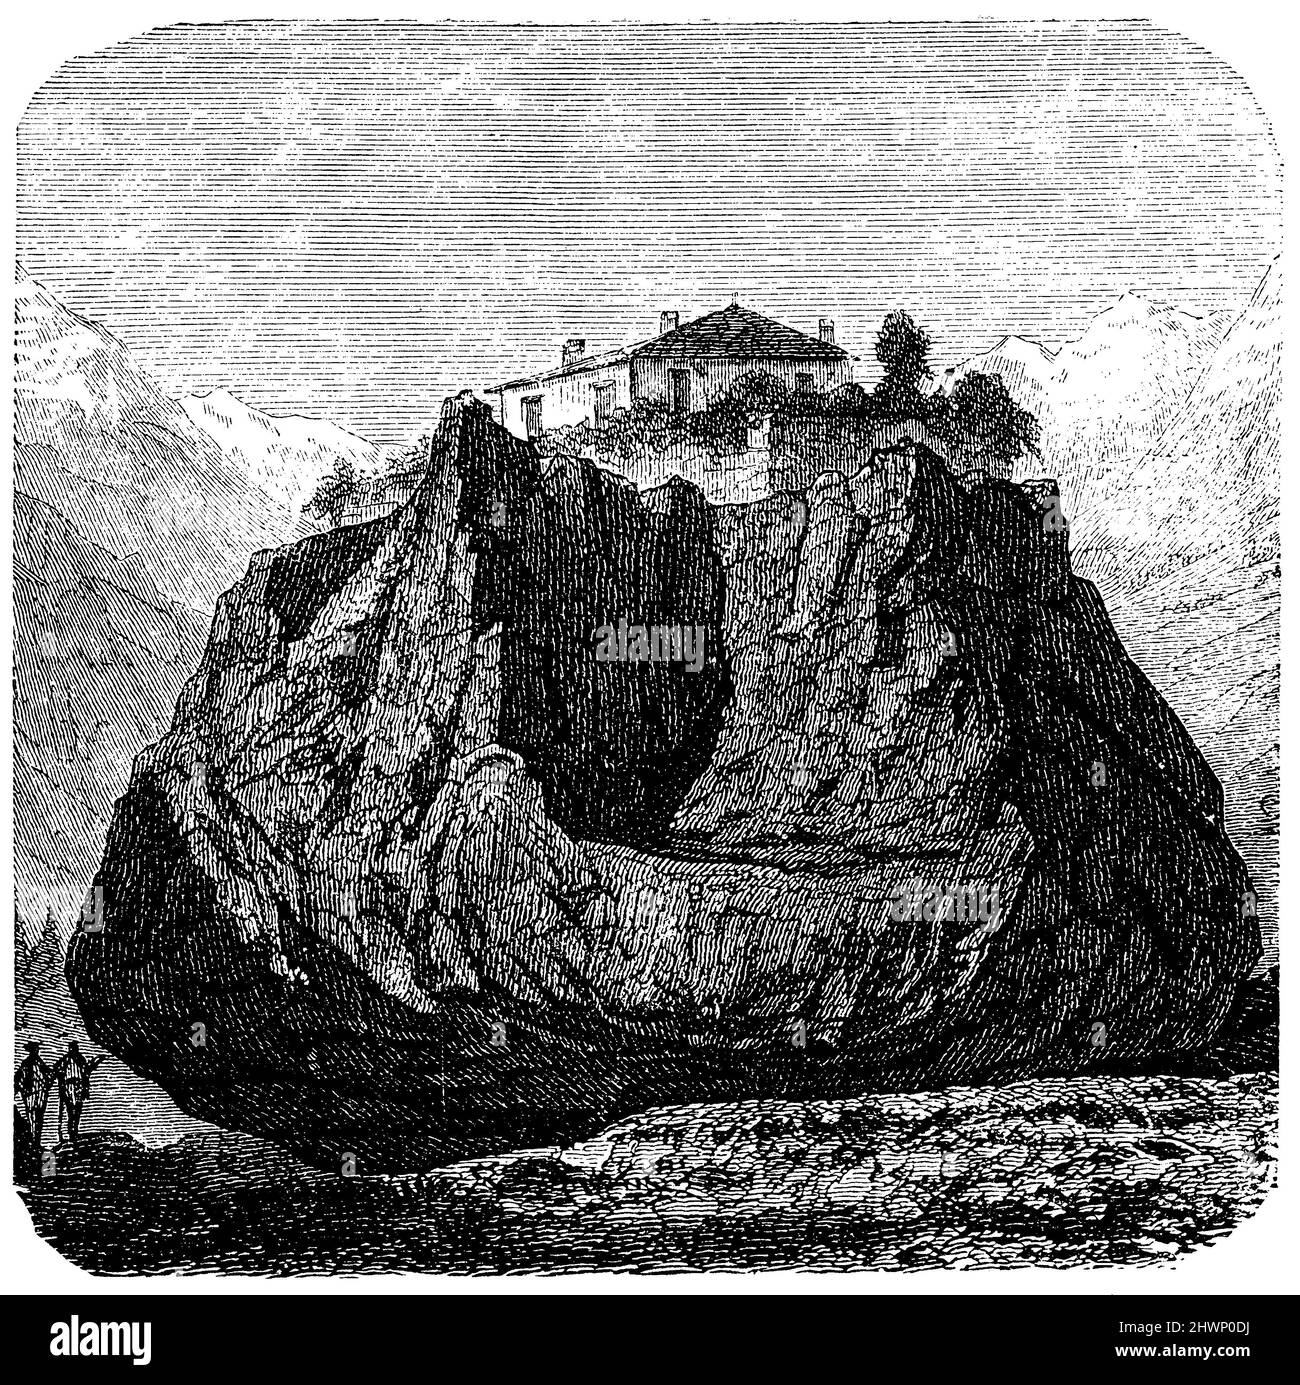 Bloc de granit erratique près de Monthley en Suisse, , (encyclopédie, 1893), Erratischer Granitblock BEI Monthley in der Schweiz, Bloc de granit pratique près de Monthley en Suisse Banque D'Images